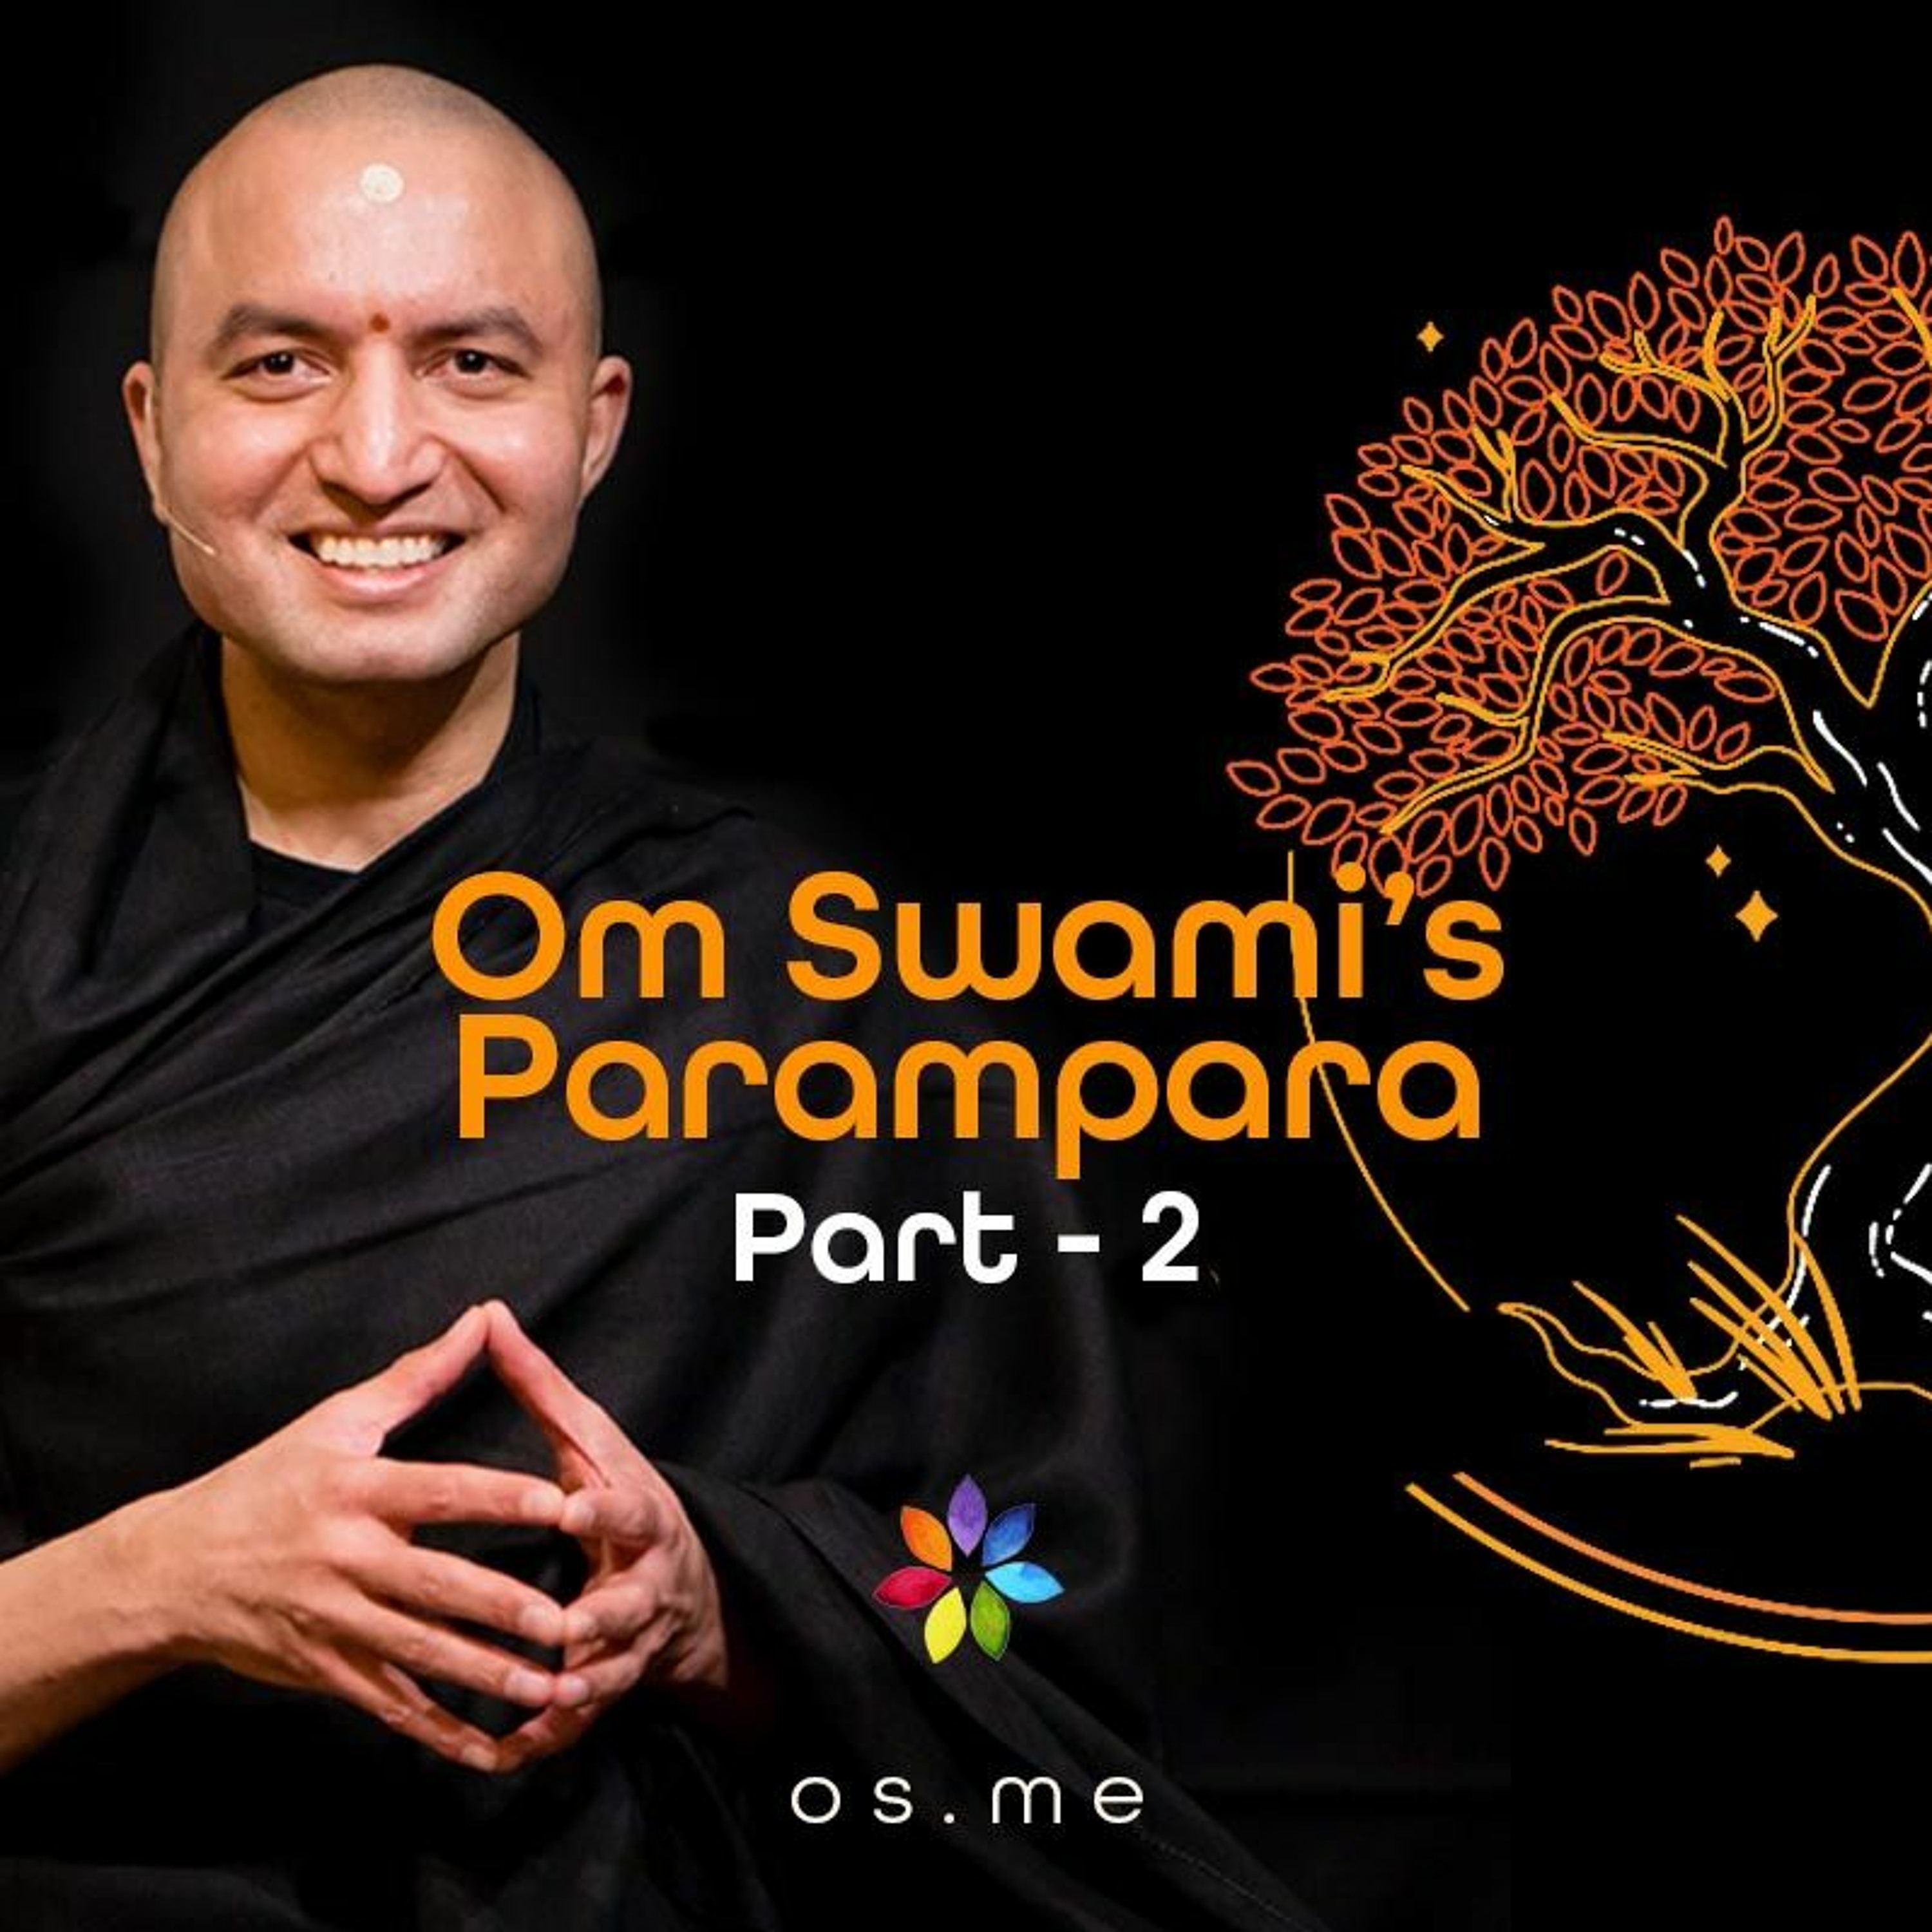 Om Swami's Parampara (Lineage) - Part 2 [Hindi]